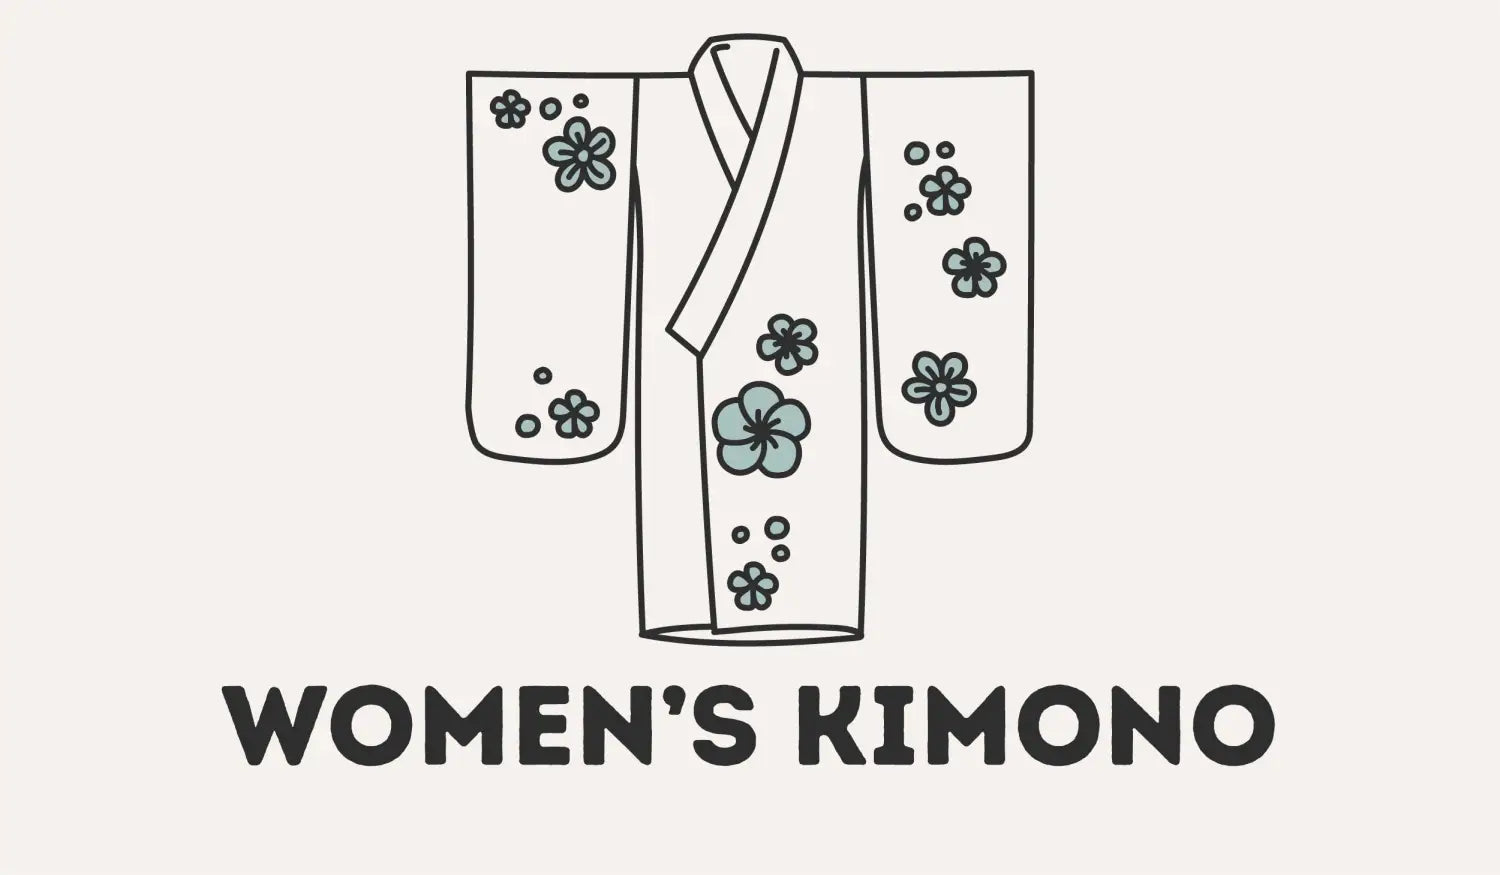 Traditional Japanese Kimono